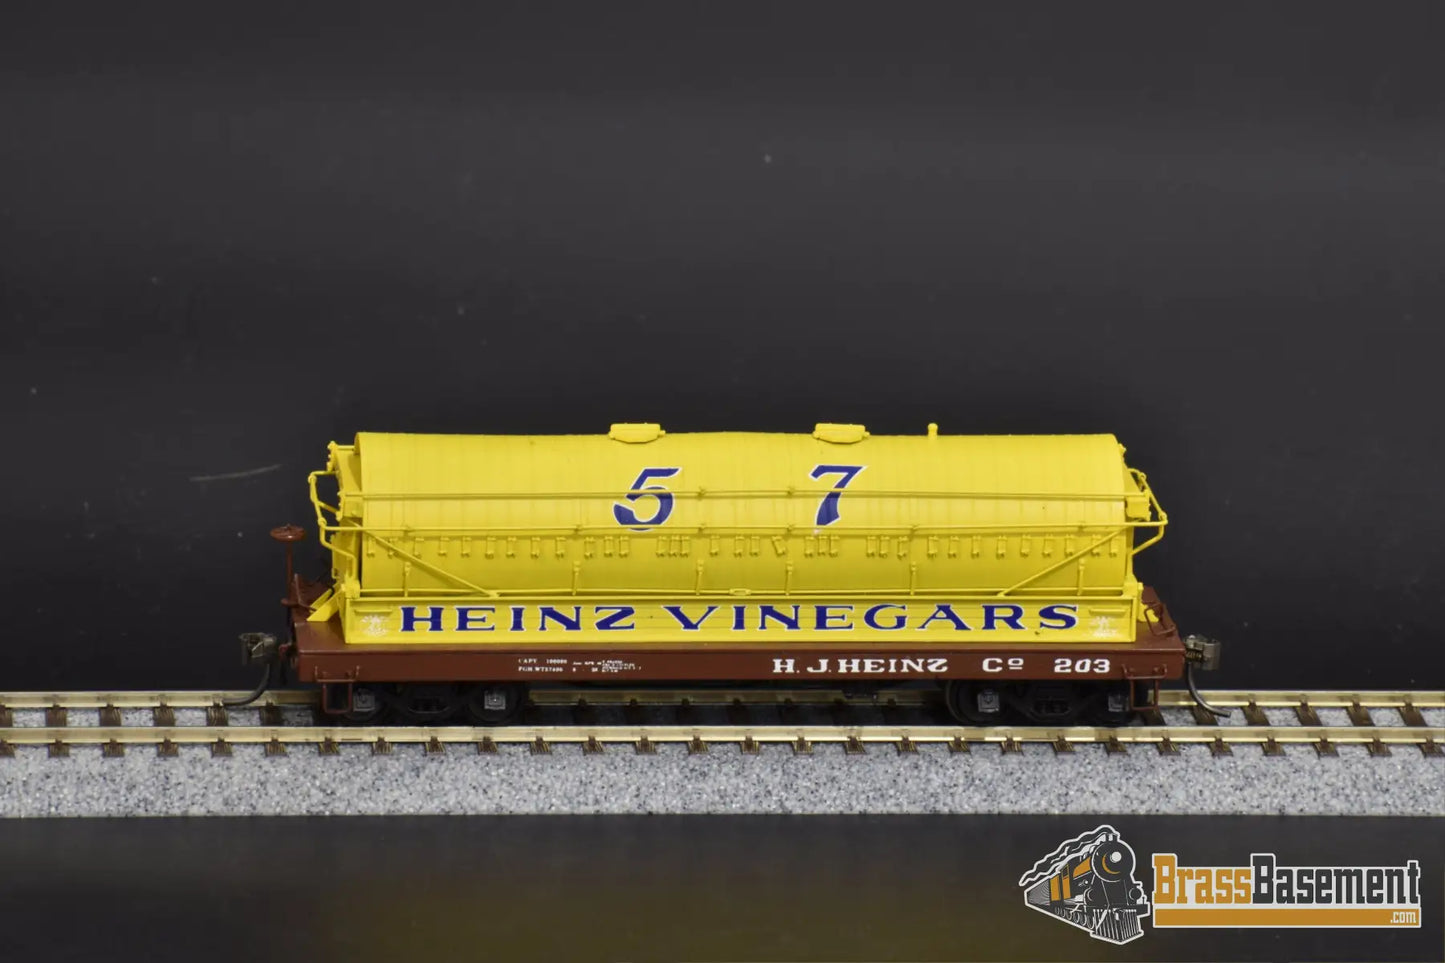 Ho Brass - Omi 3157 H.j. Heinz Vinegar Car #203 Pro Paint Freight